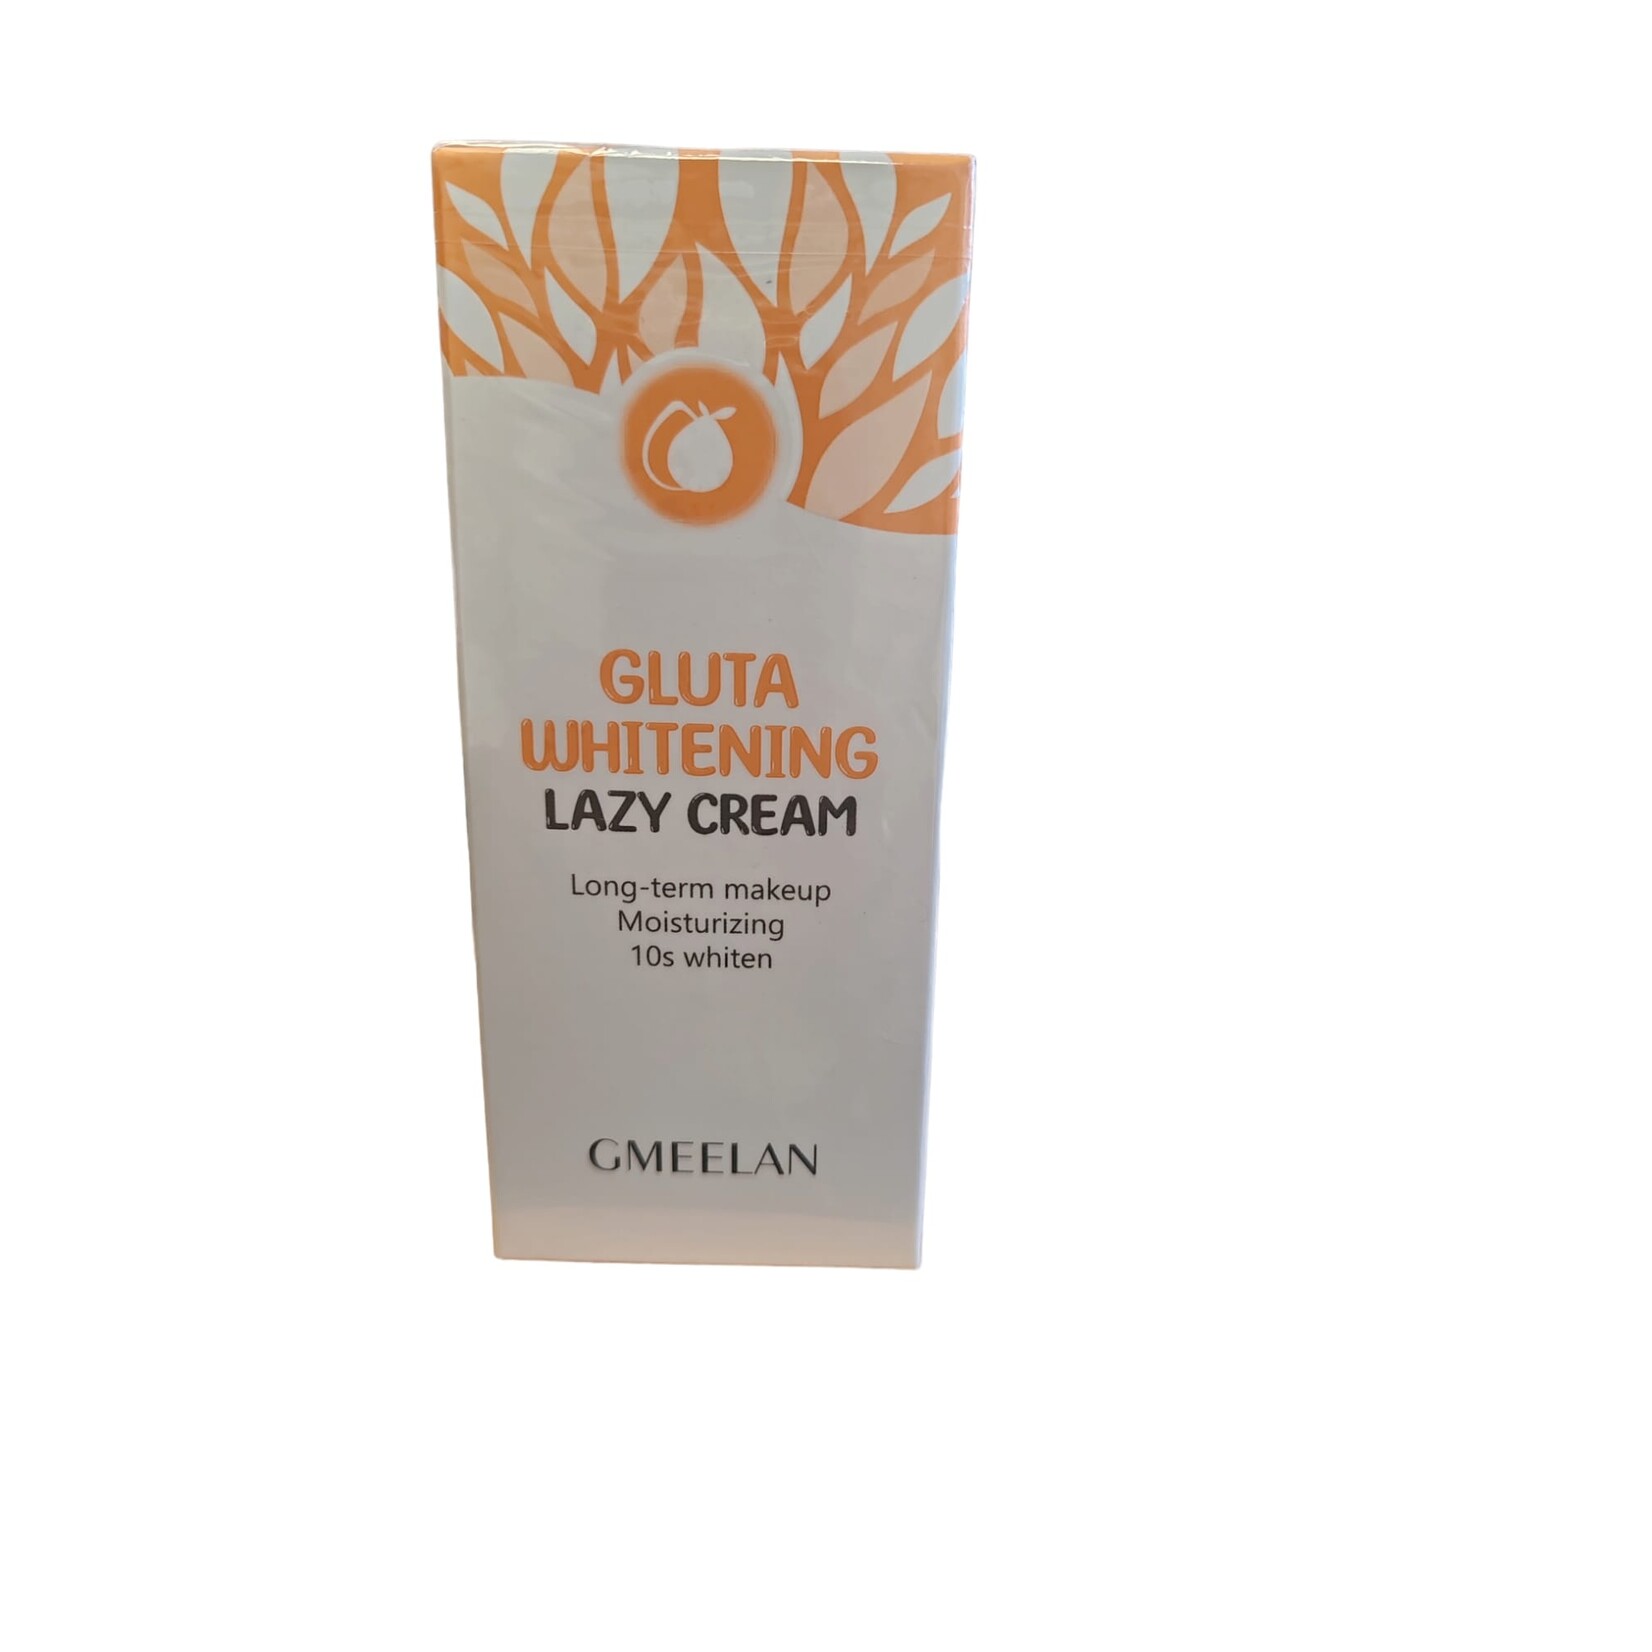 Gmeelan Gluta Whitening Lazy cream  30 gram